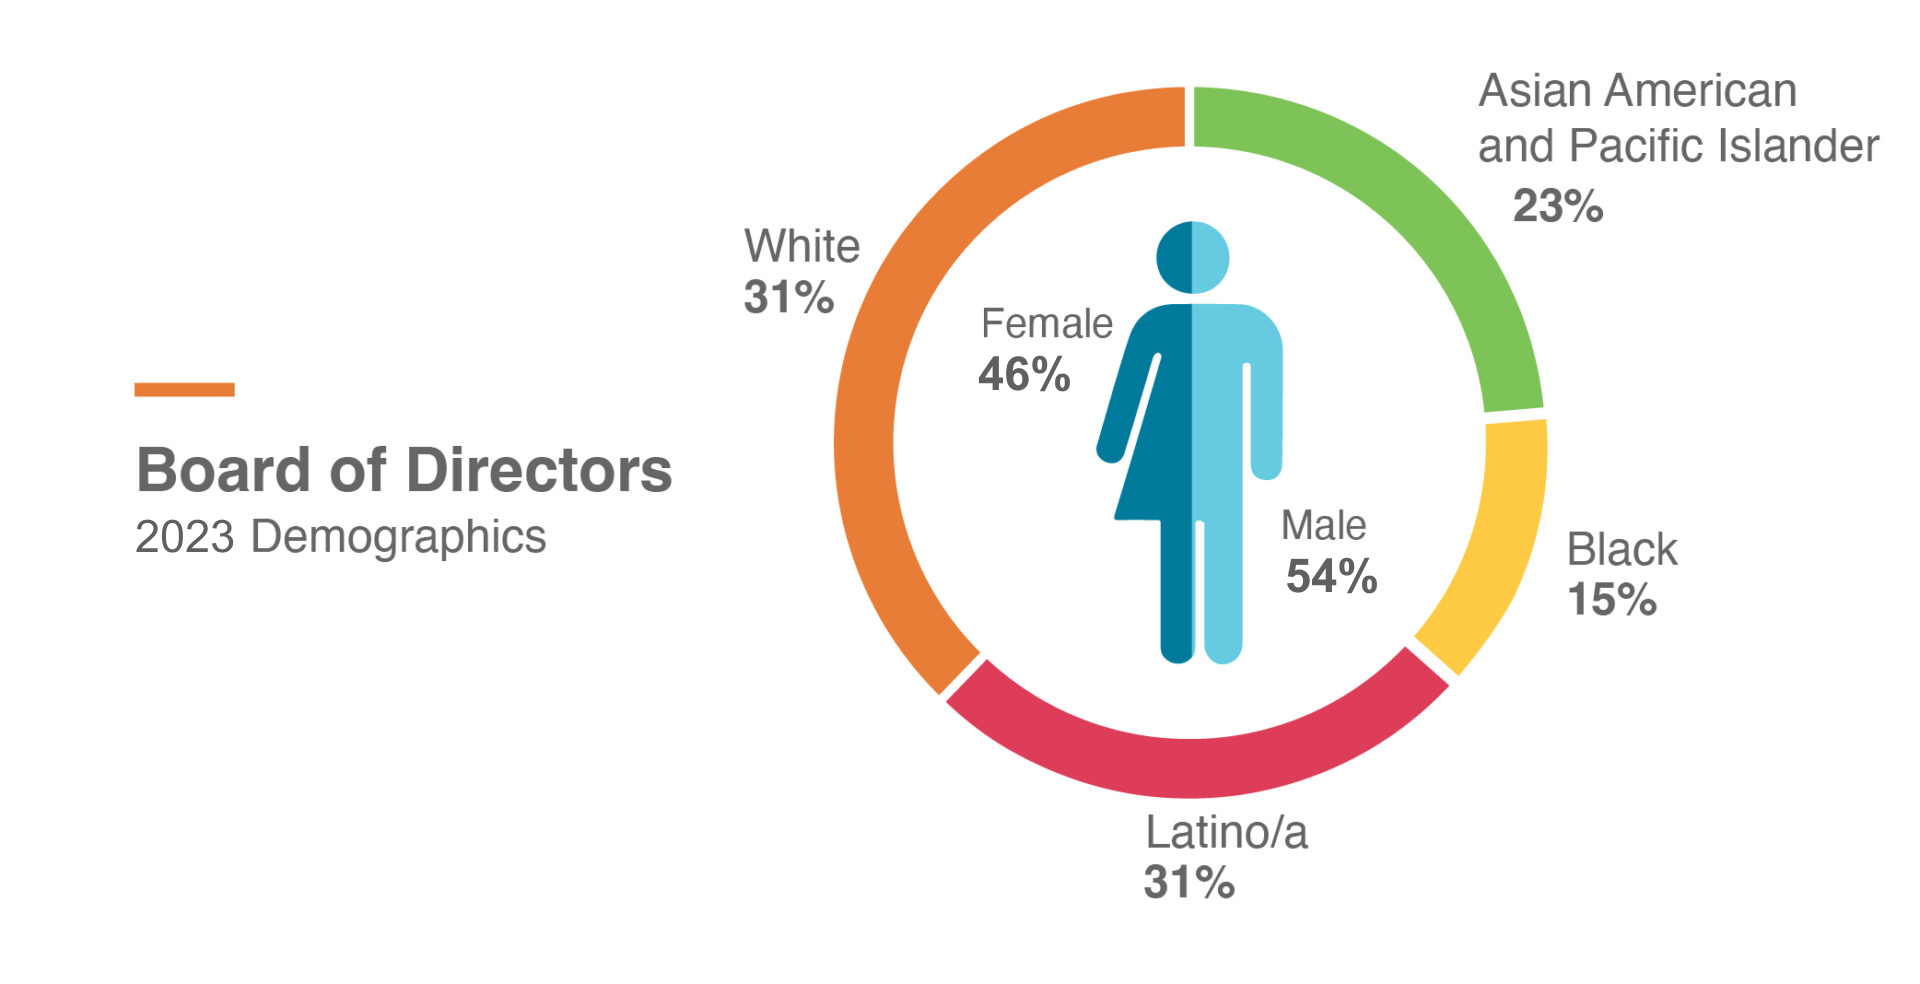 Board of Directors 2023 Demographics White - 31% Asian American and Pacific Islander - 23% Black - 15% Latino/a - 31% Male - 54% Female - 46%